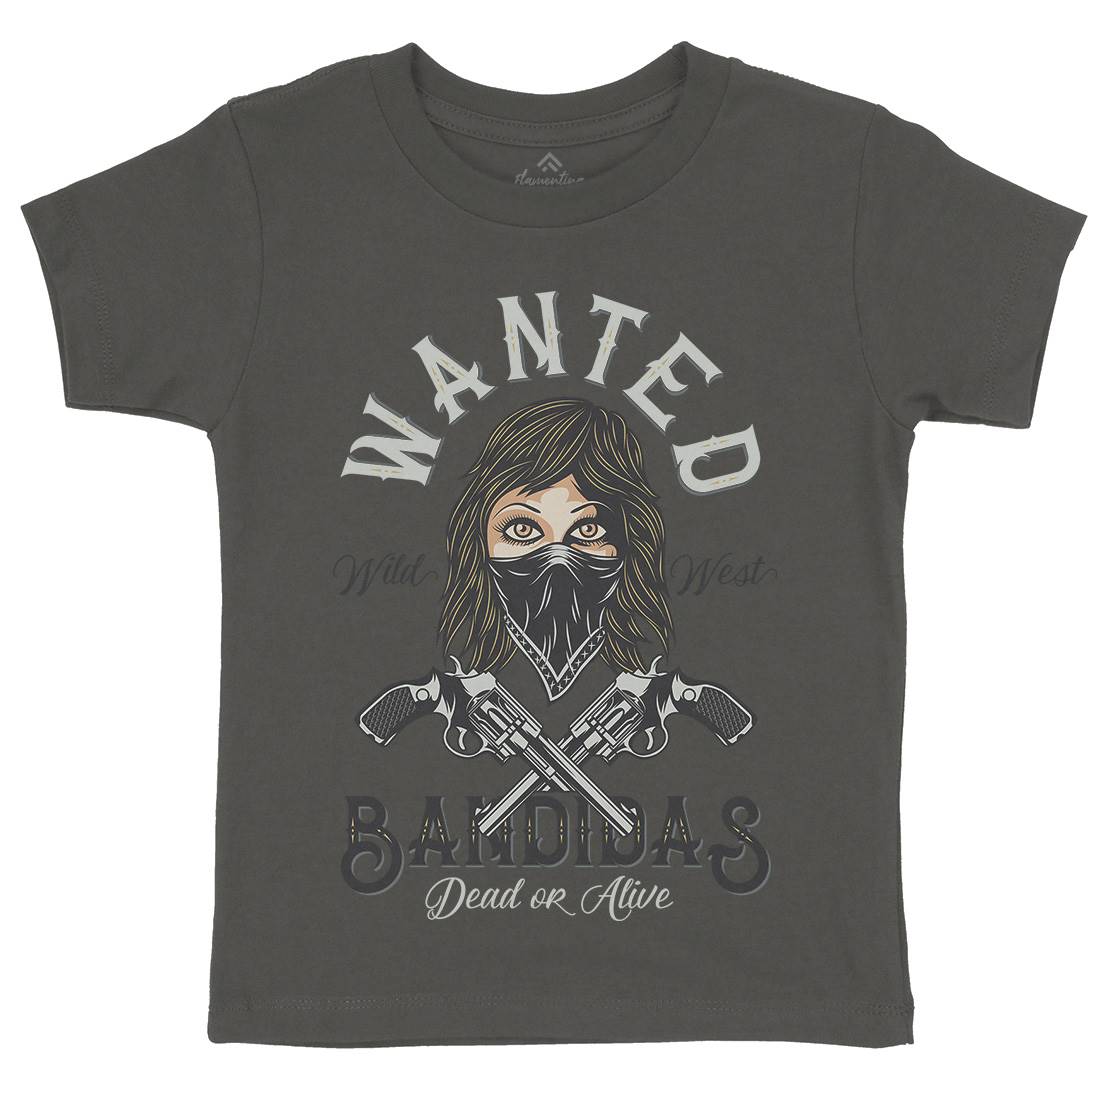 Wanted Bandidas Kids Organic Crew Neck T-Shirt Retro D995